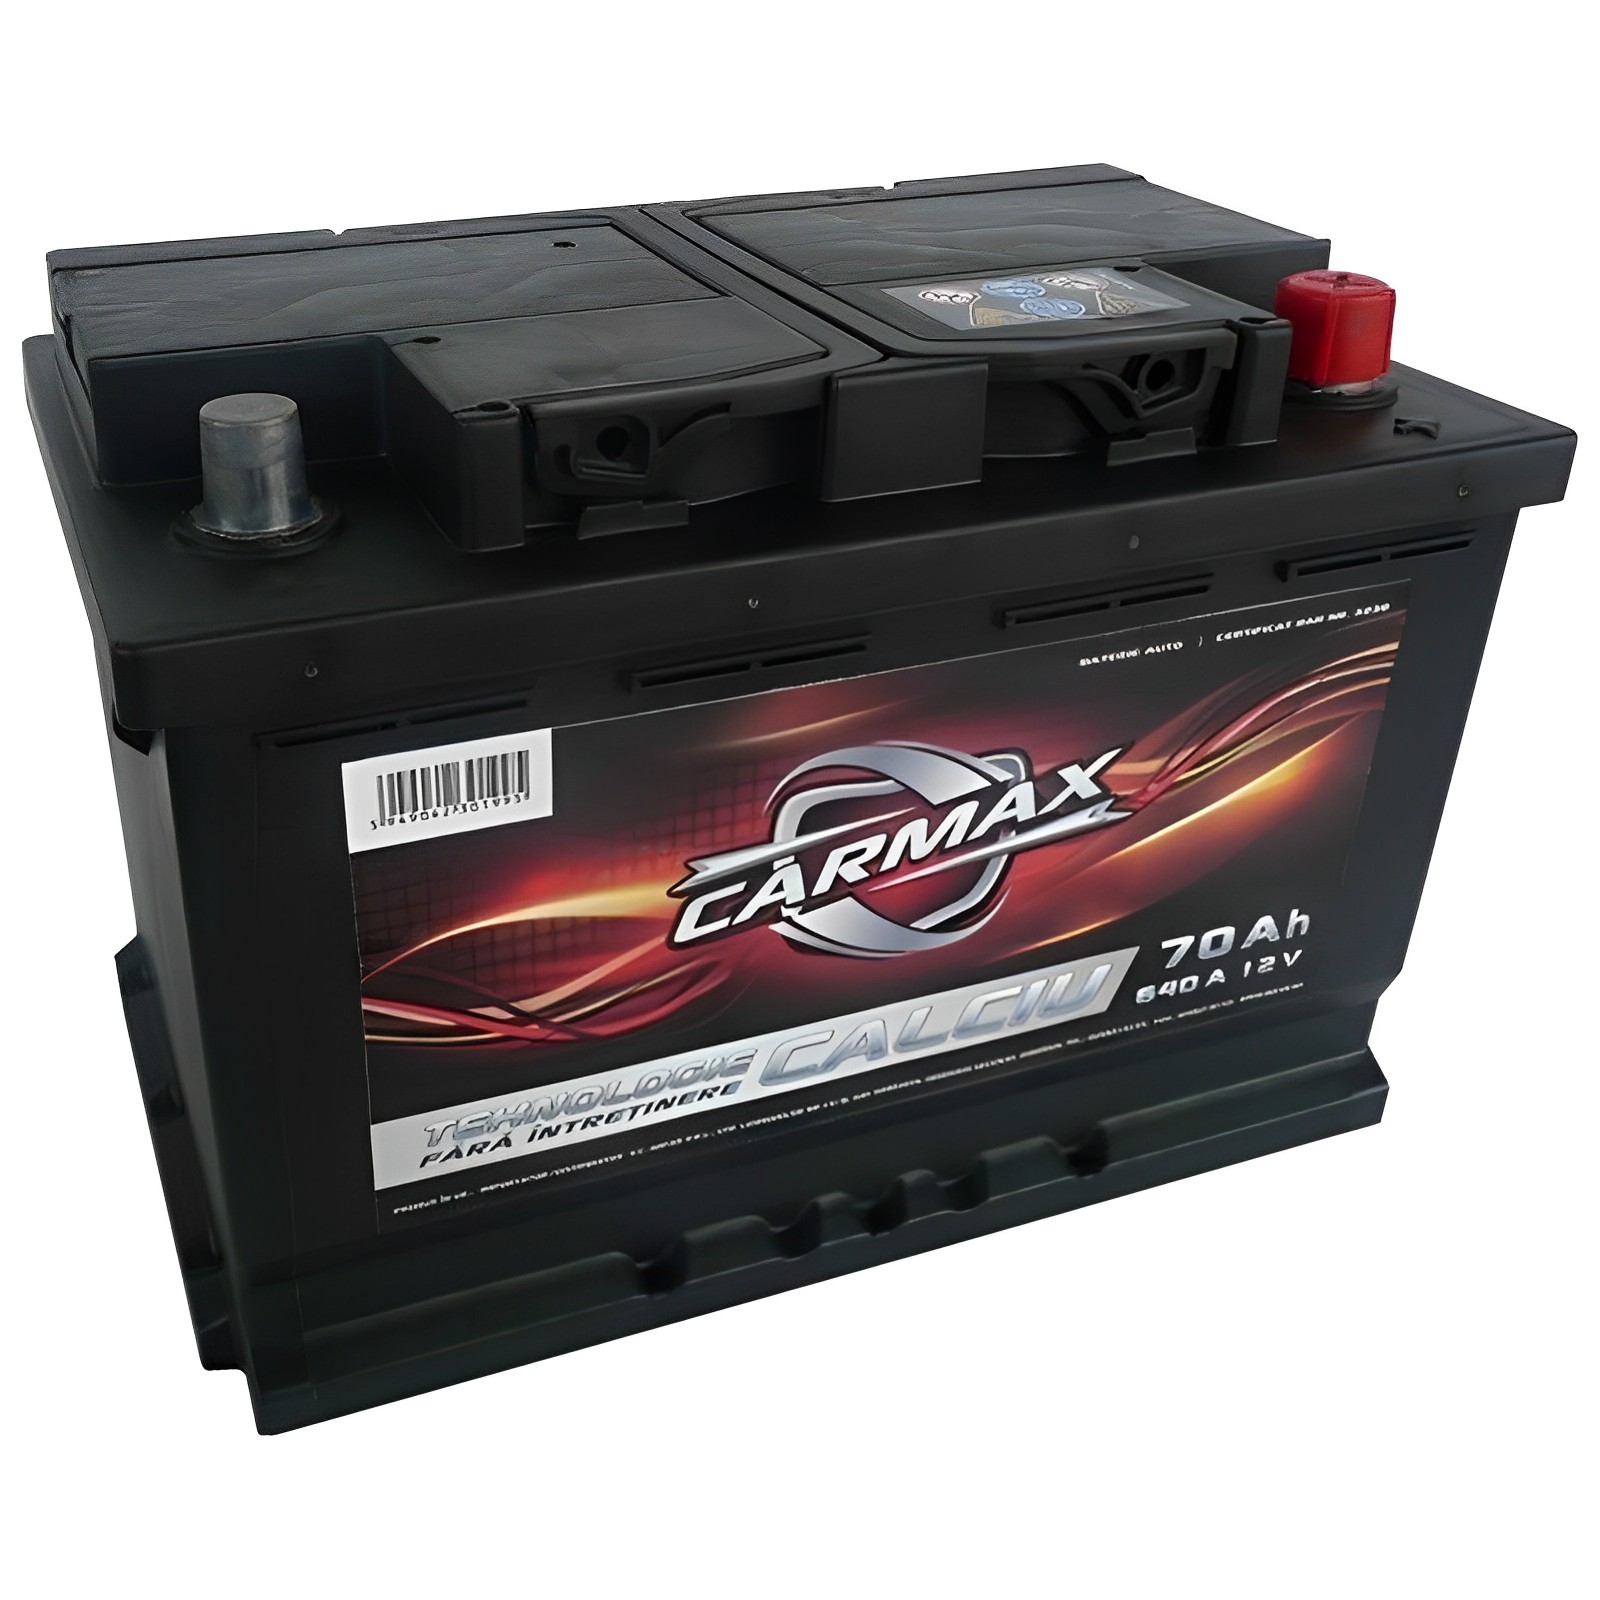 Baterie auto Carmax IdealStore, Capacitate 70Ah,12V, Recomandata masinilor diesel